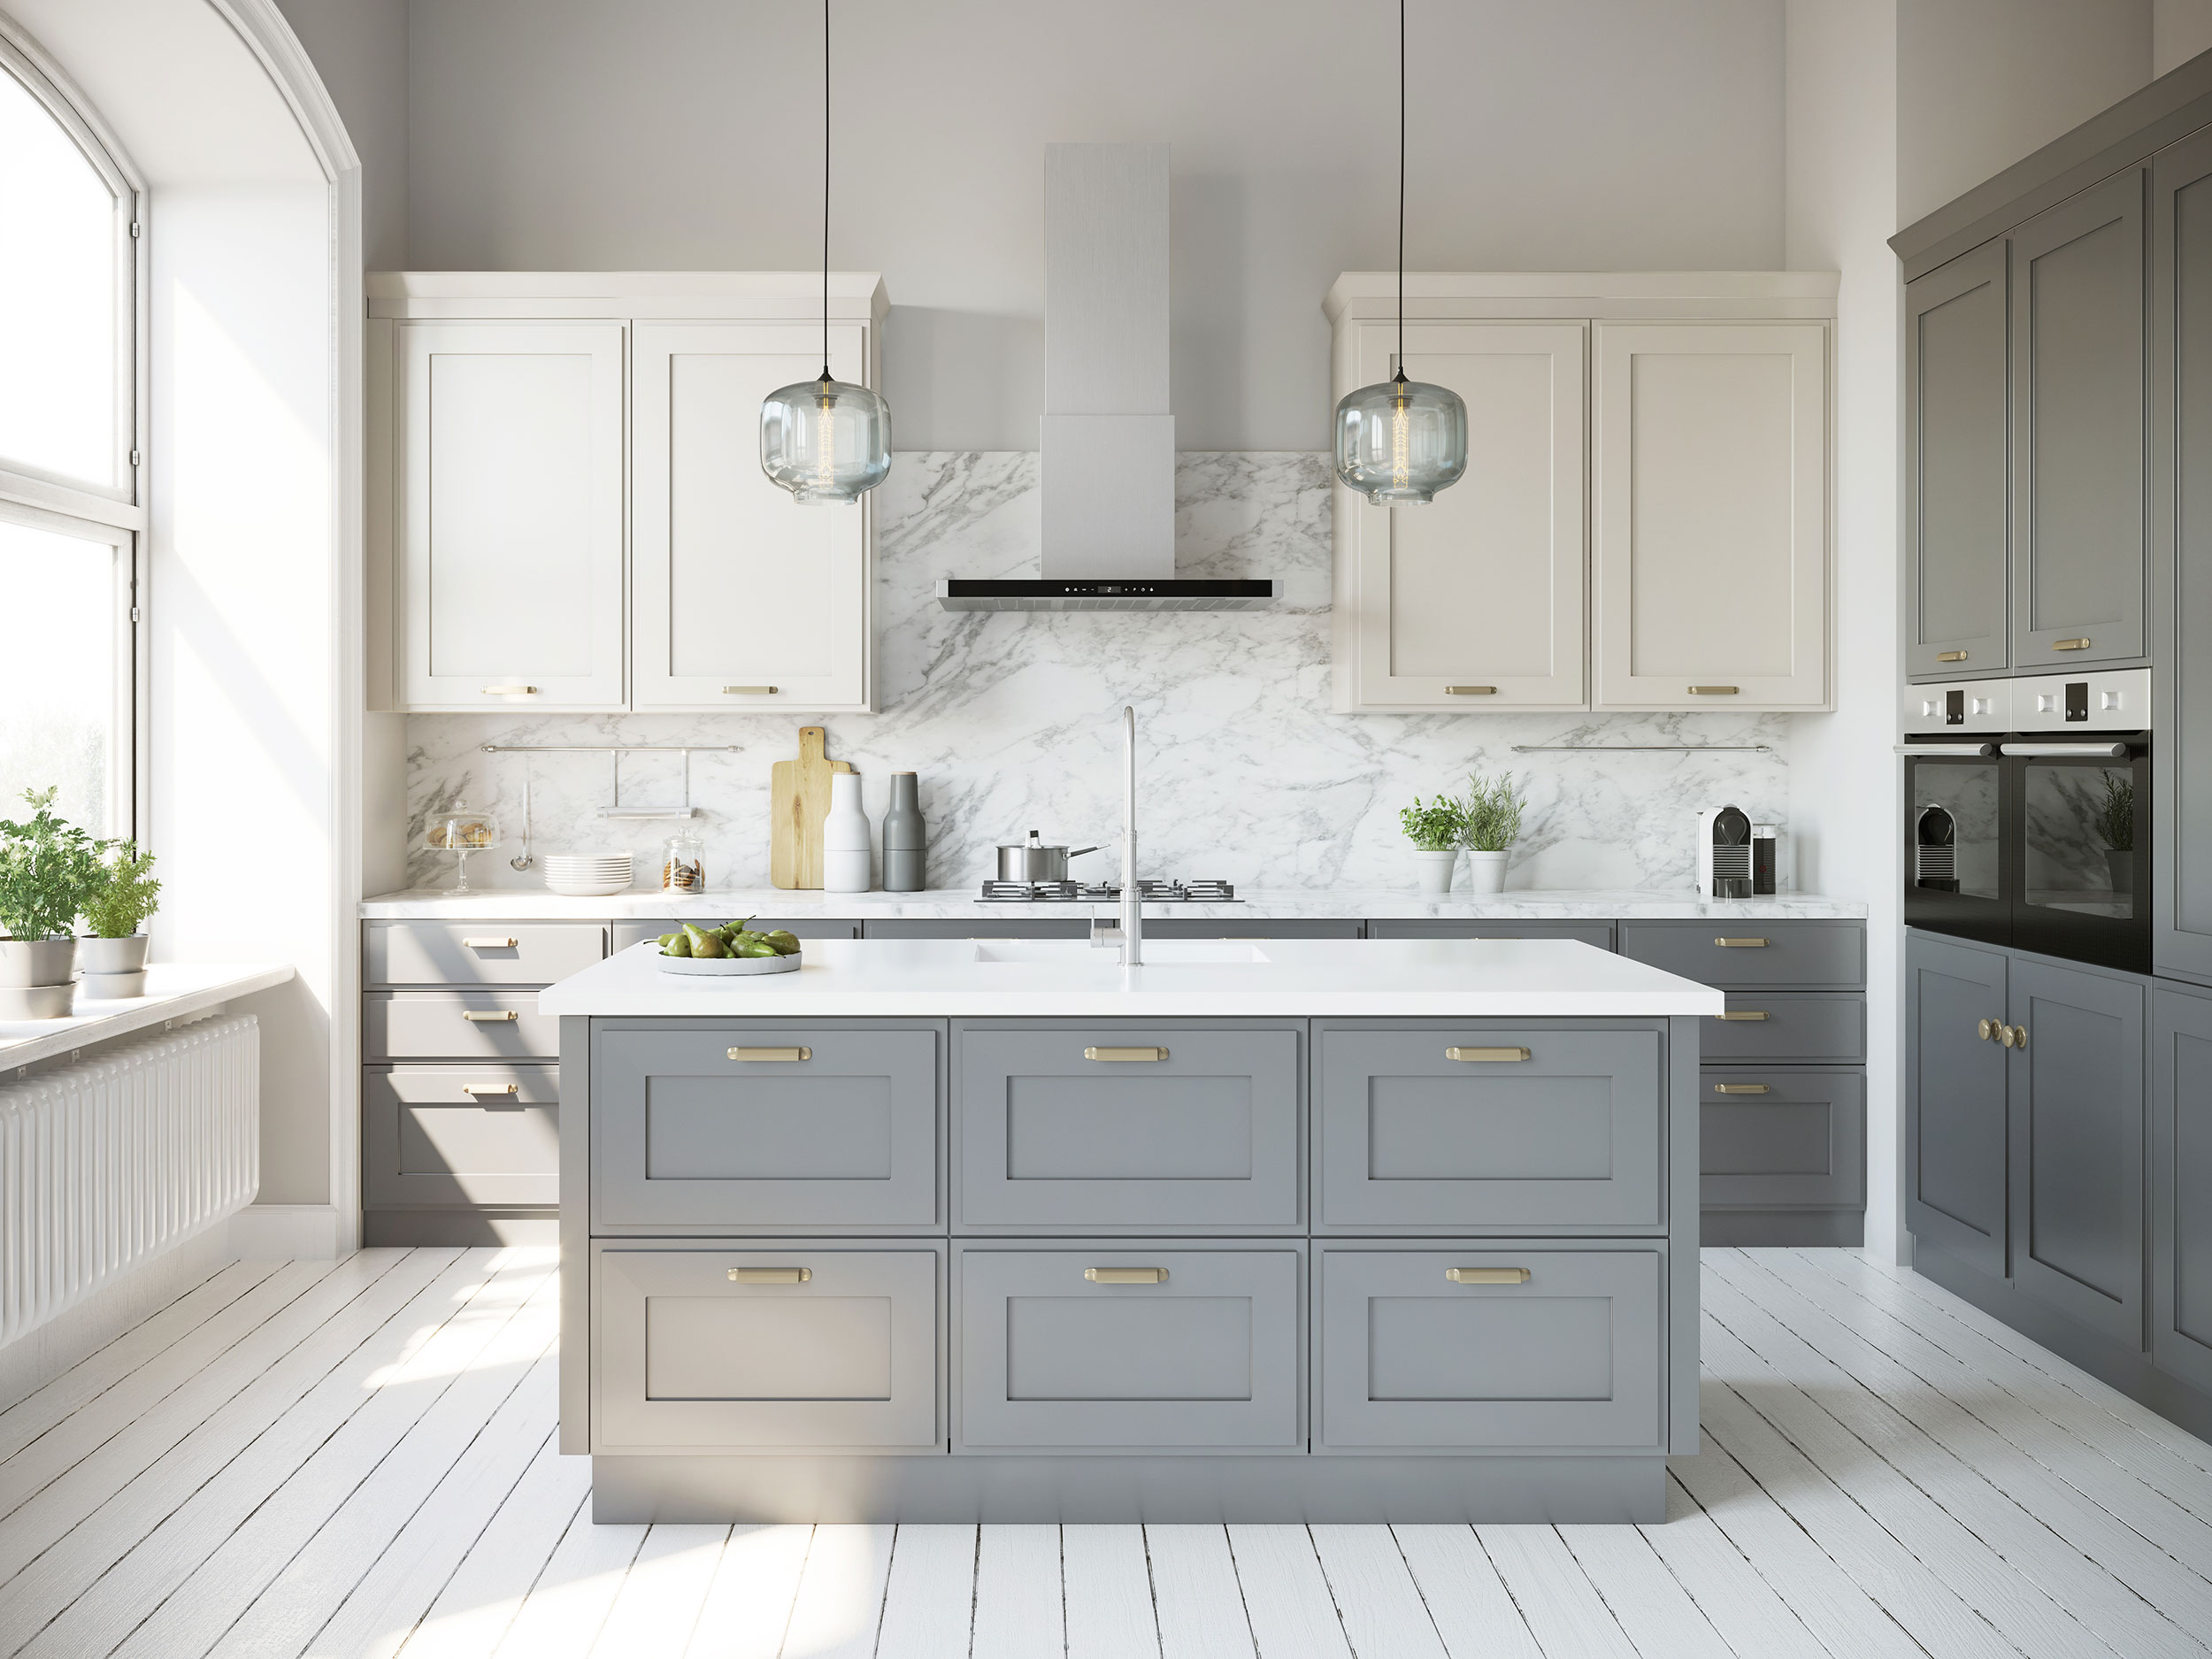 Understanding the Kitchen Cabinet Layout in Newer Homes 2